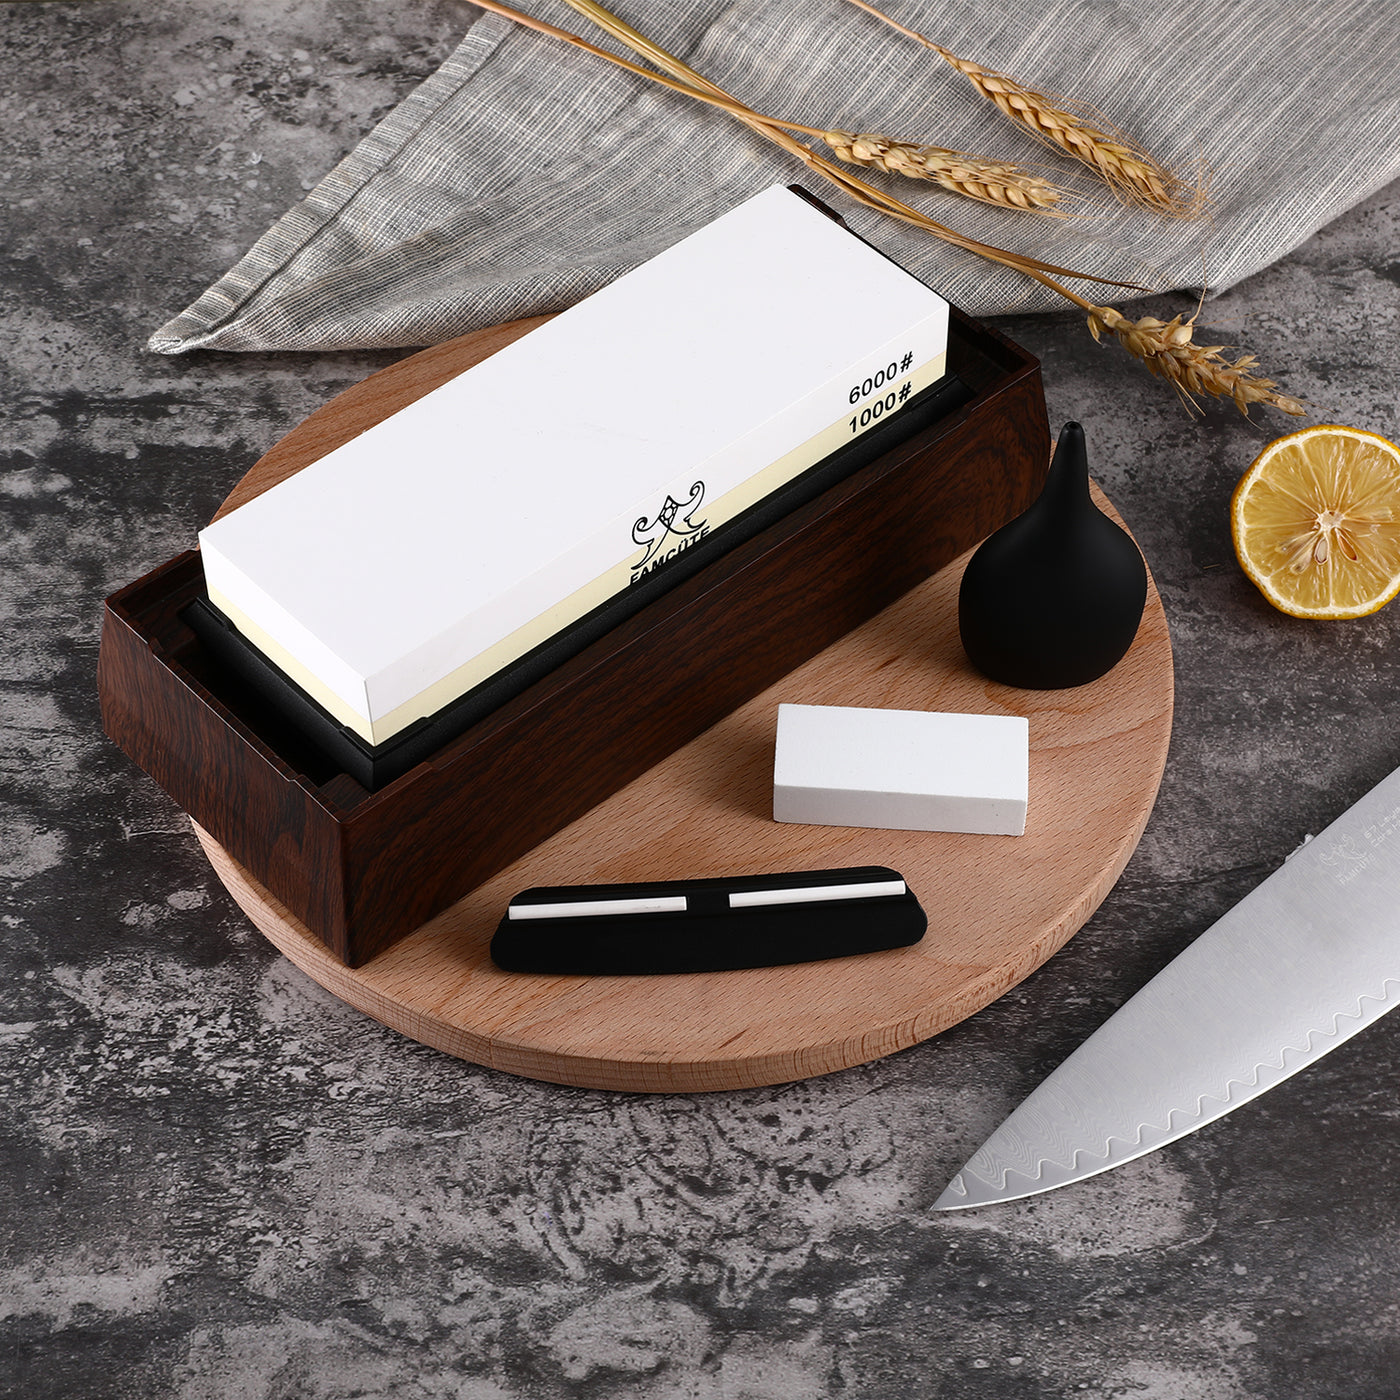 SENKEN 1000/6000 Grit Japanese Whetstone Kit Knife Sharpening Stone with Angle Guide and Wooden Holder - Dual Function Sharpen & Hone Kitchen Knives